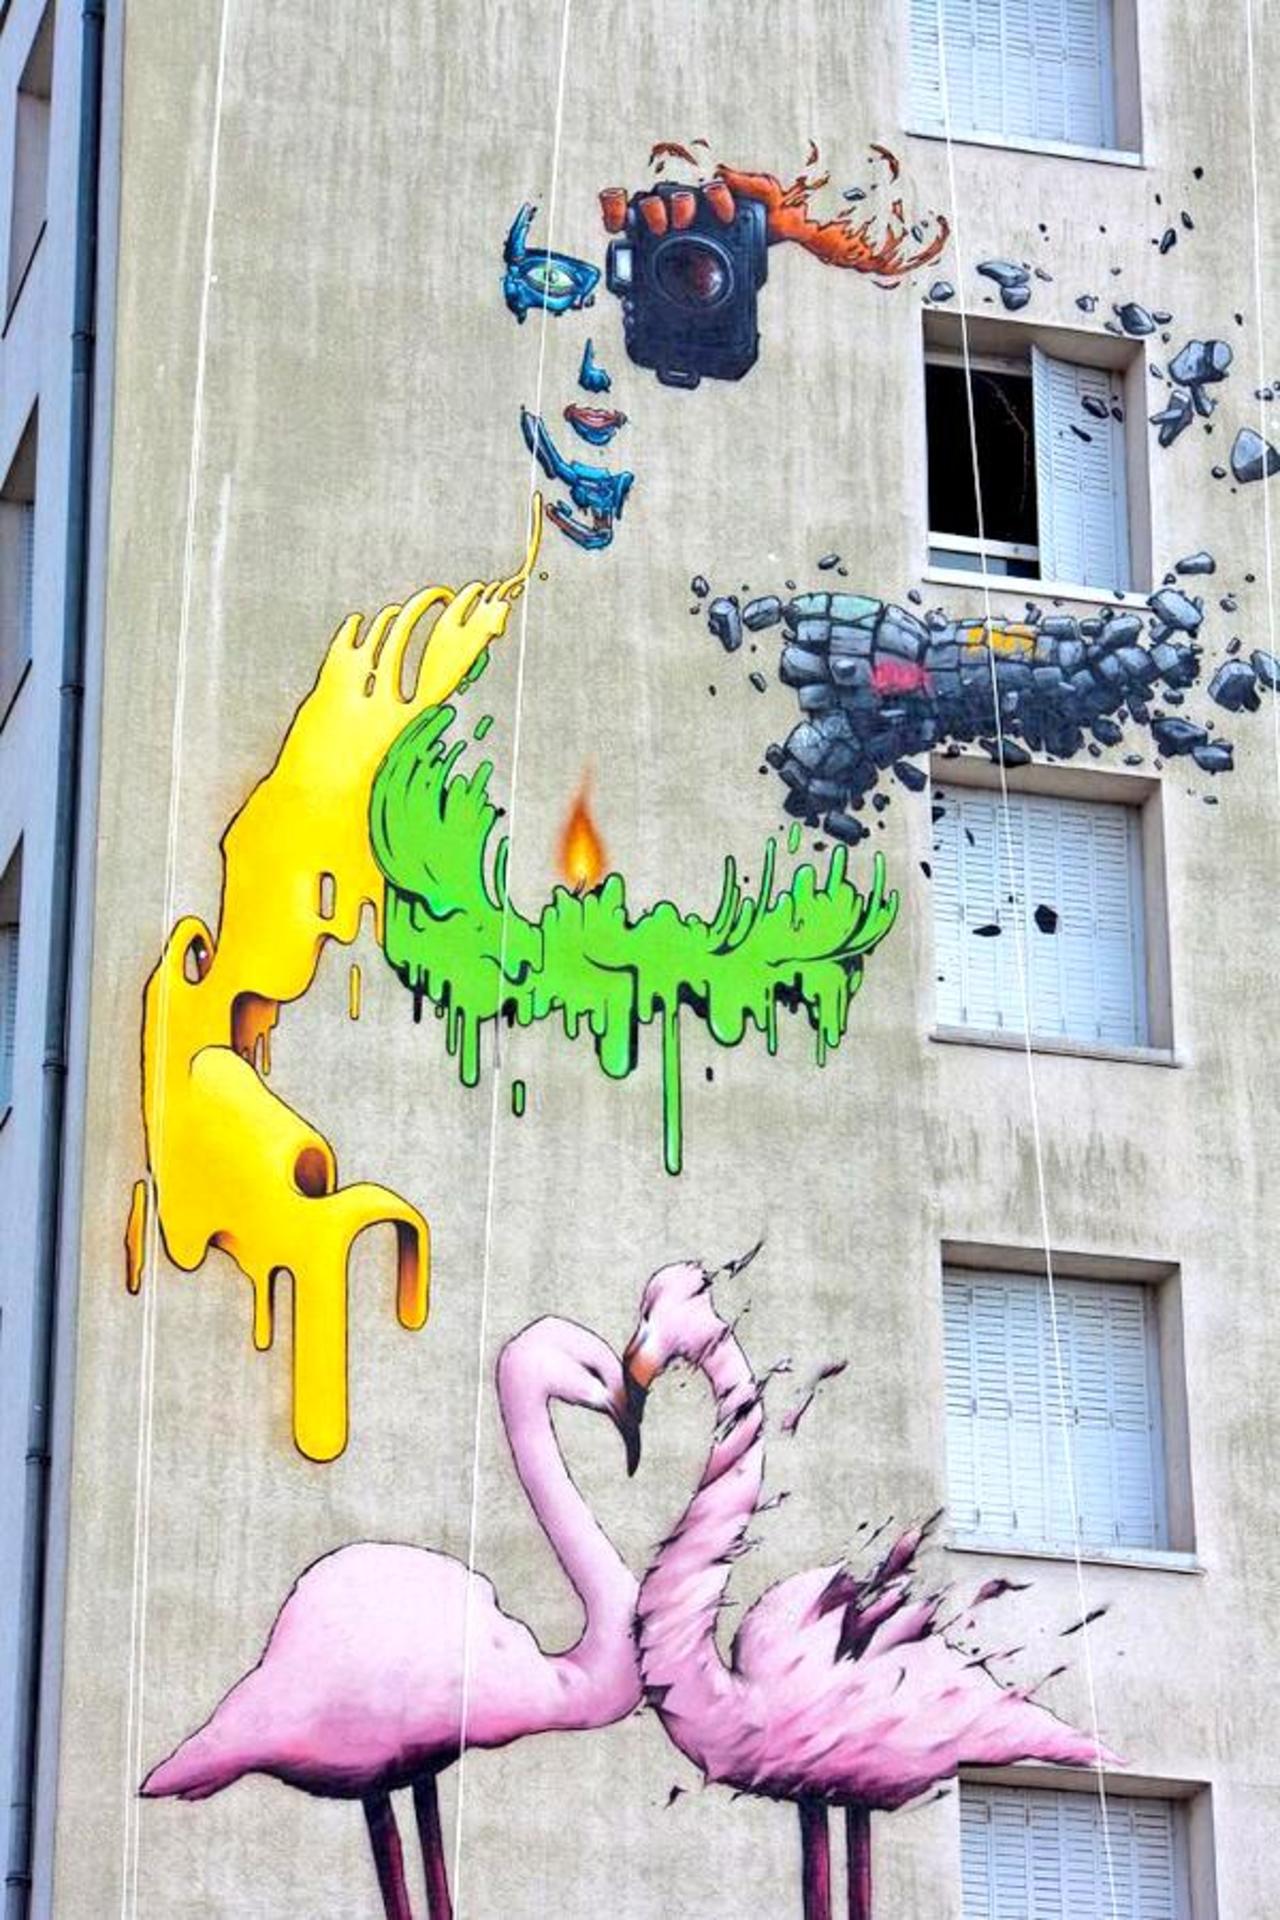 This is sick!
“@Pitchuskita: French artist Brusk 
Meinau, Strasbourg
#streetart #art #graffiti #mural http://t.co/ehCE6NeYi4”